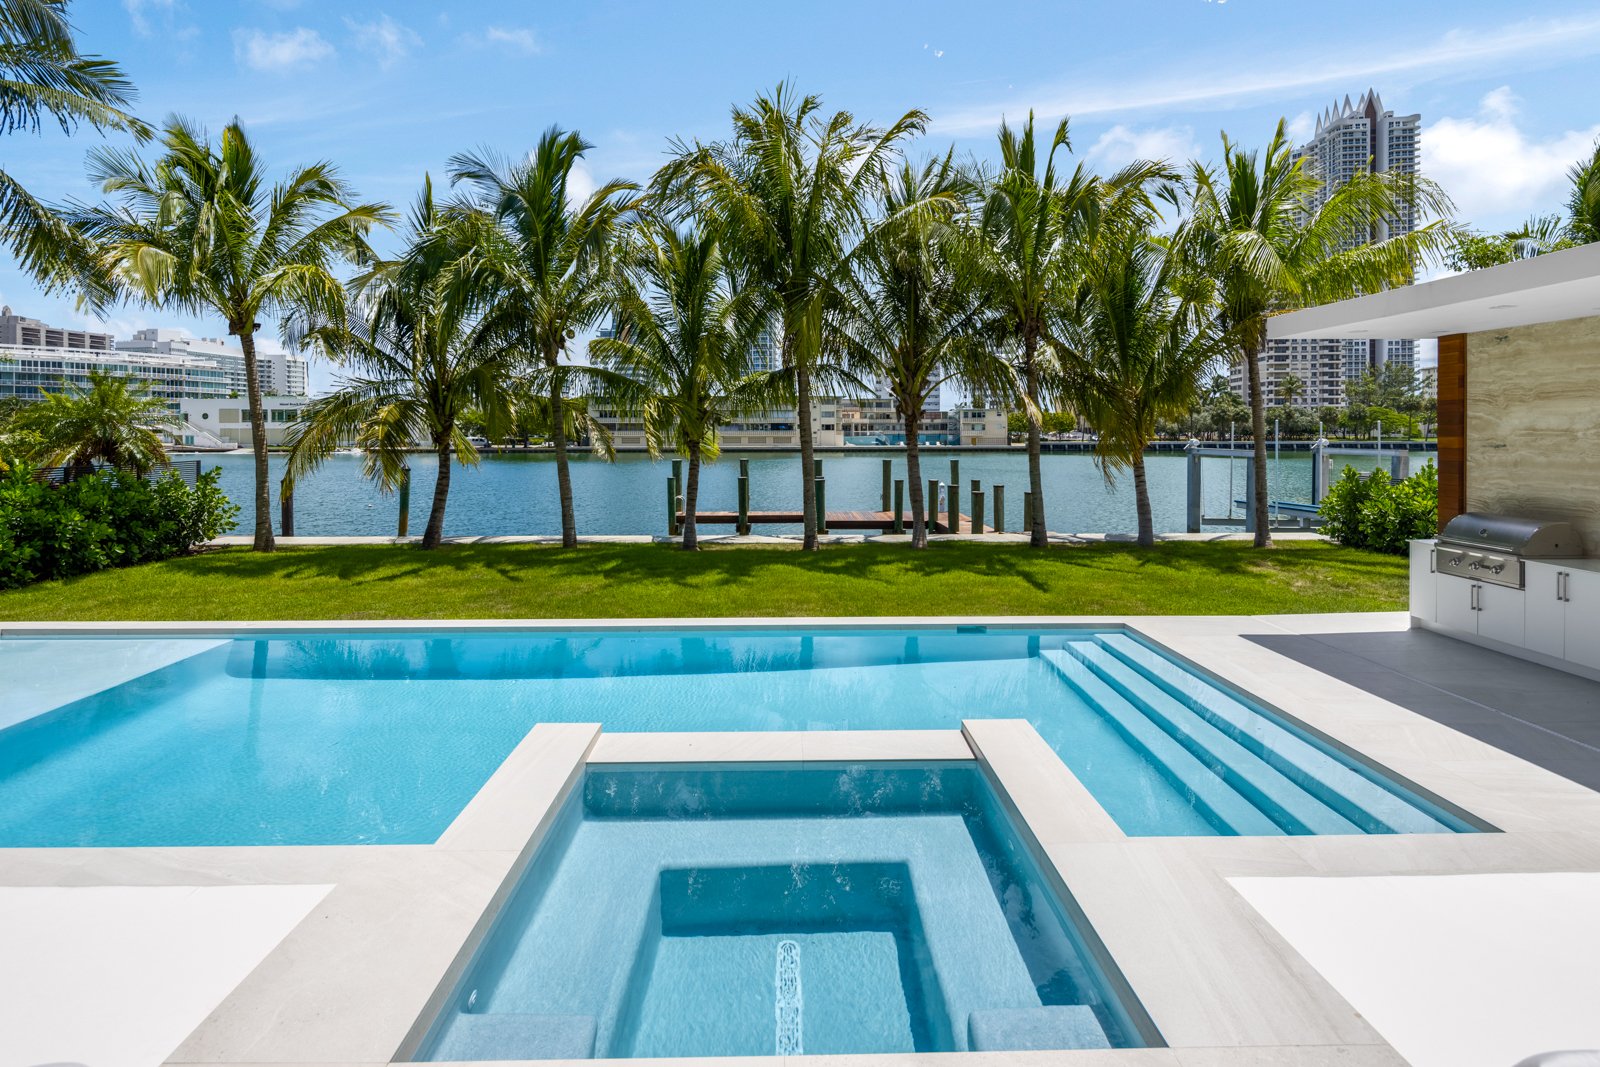 Grammy Award-Winning Rapper Future Buys Allison Island Home For $16.3 Million On Miami Beach 26.jpg